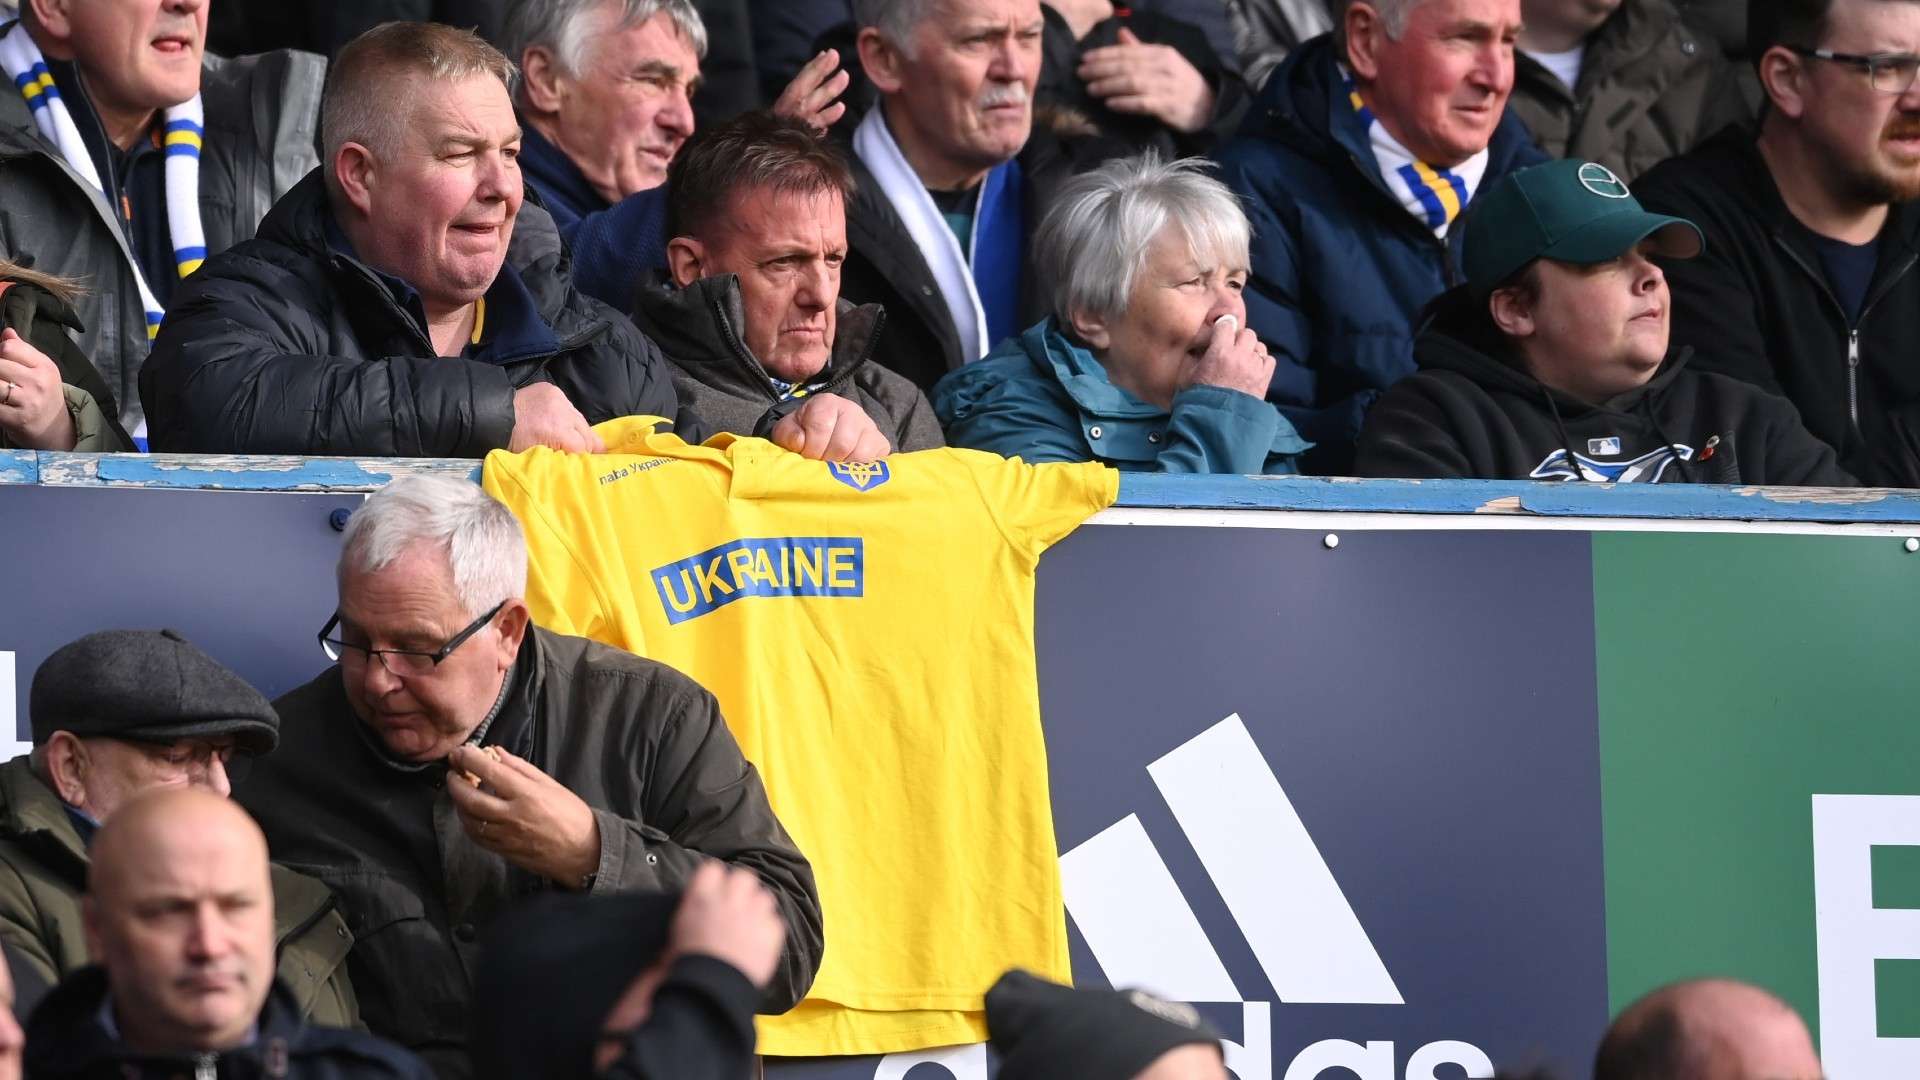 Leeds fan Ukraine shirt